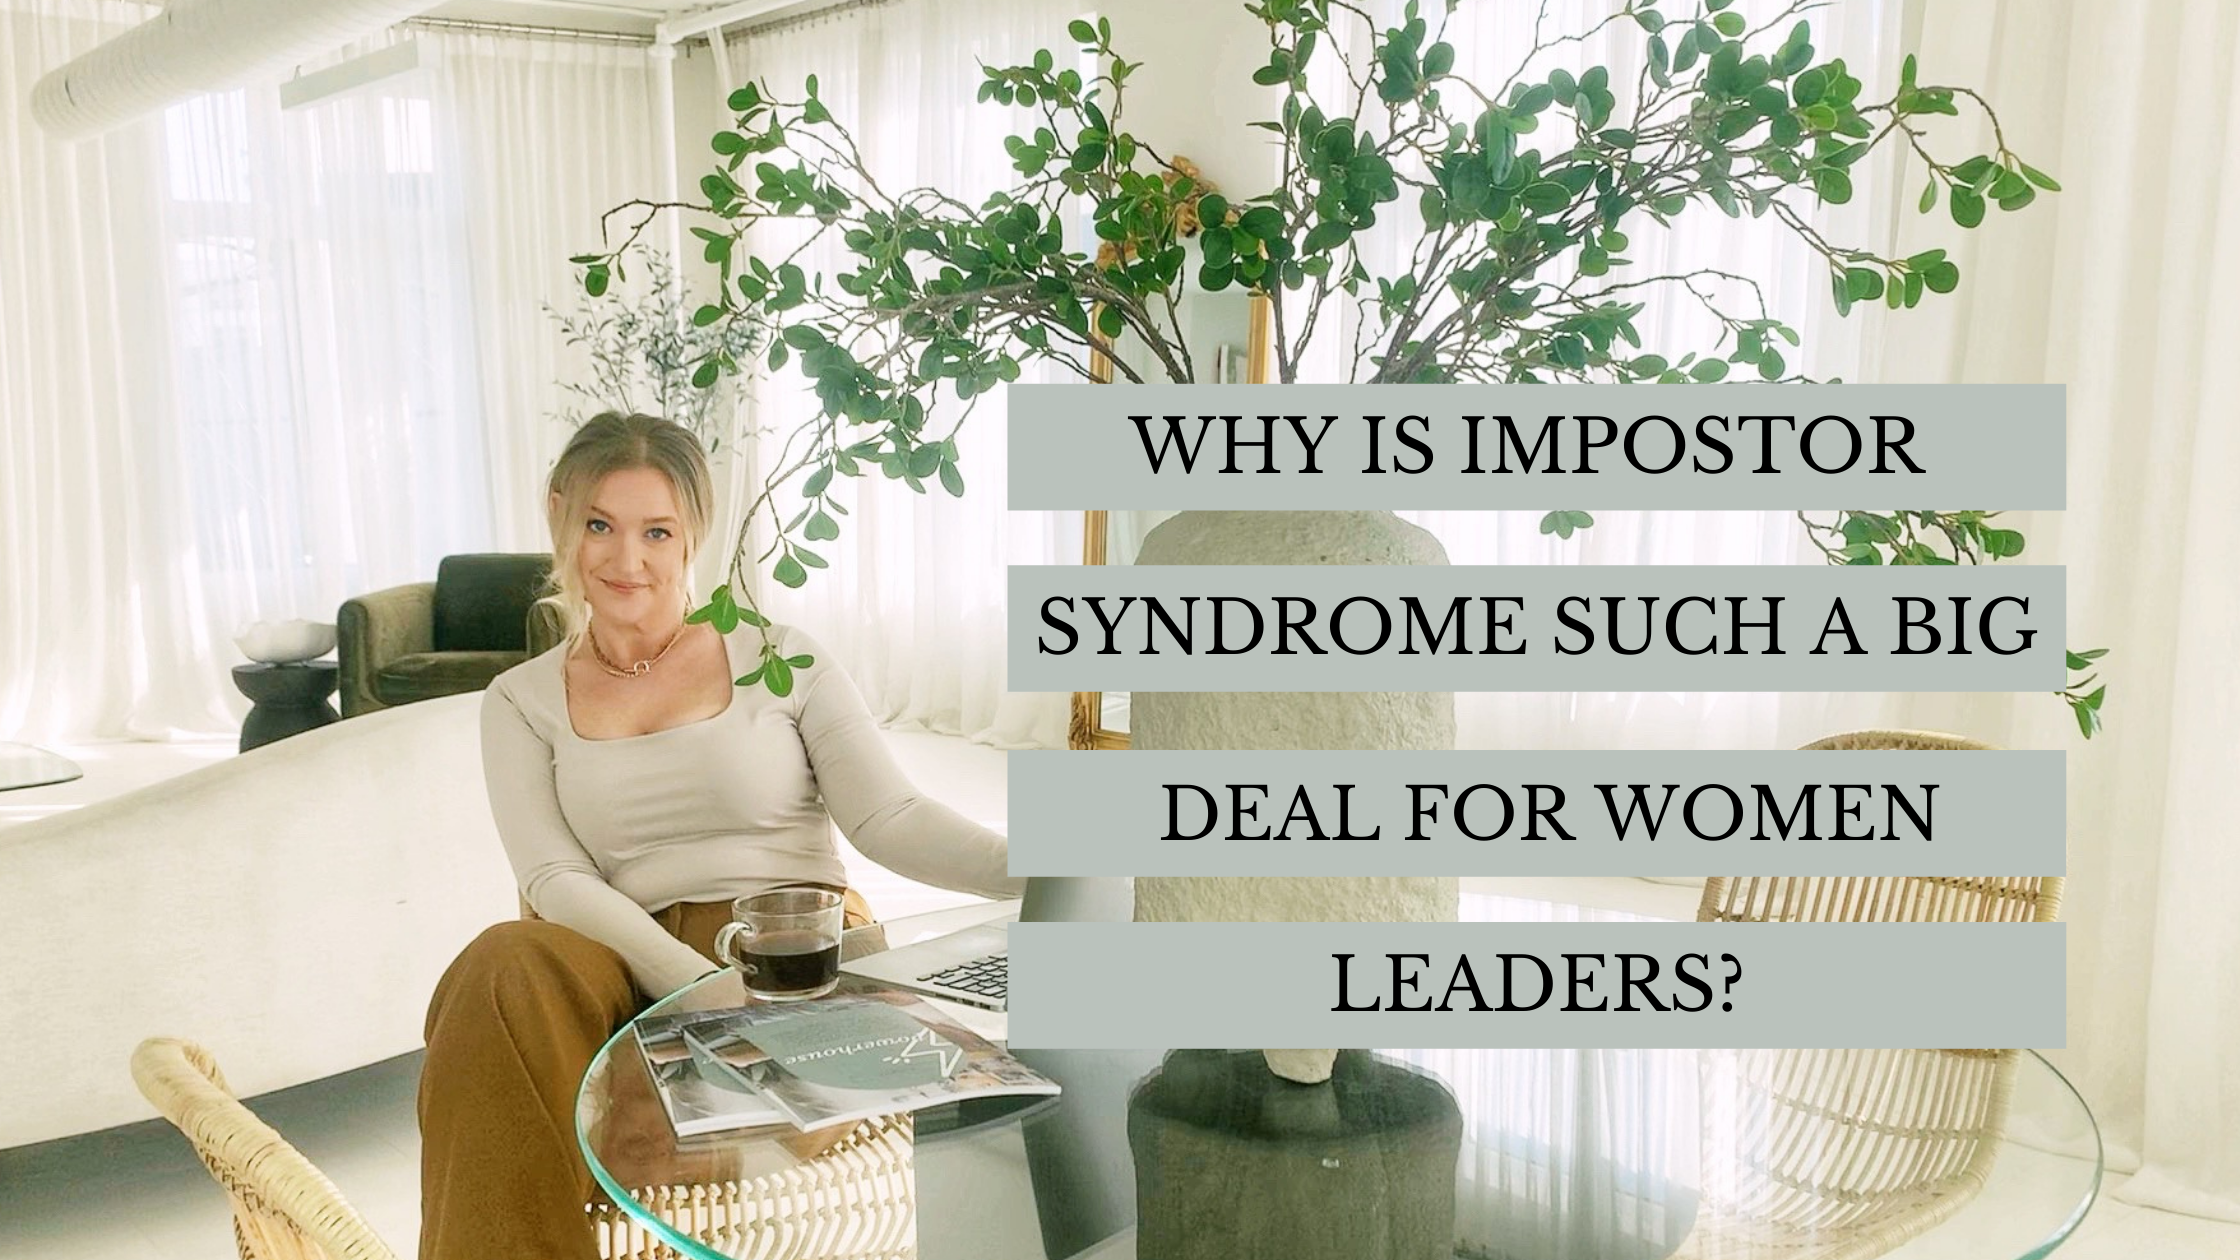 Laura Weldy Women's Leadership Coach - Impostor Syndrome for Women Leaders